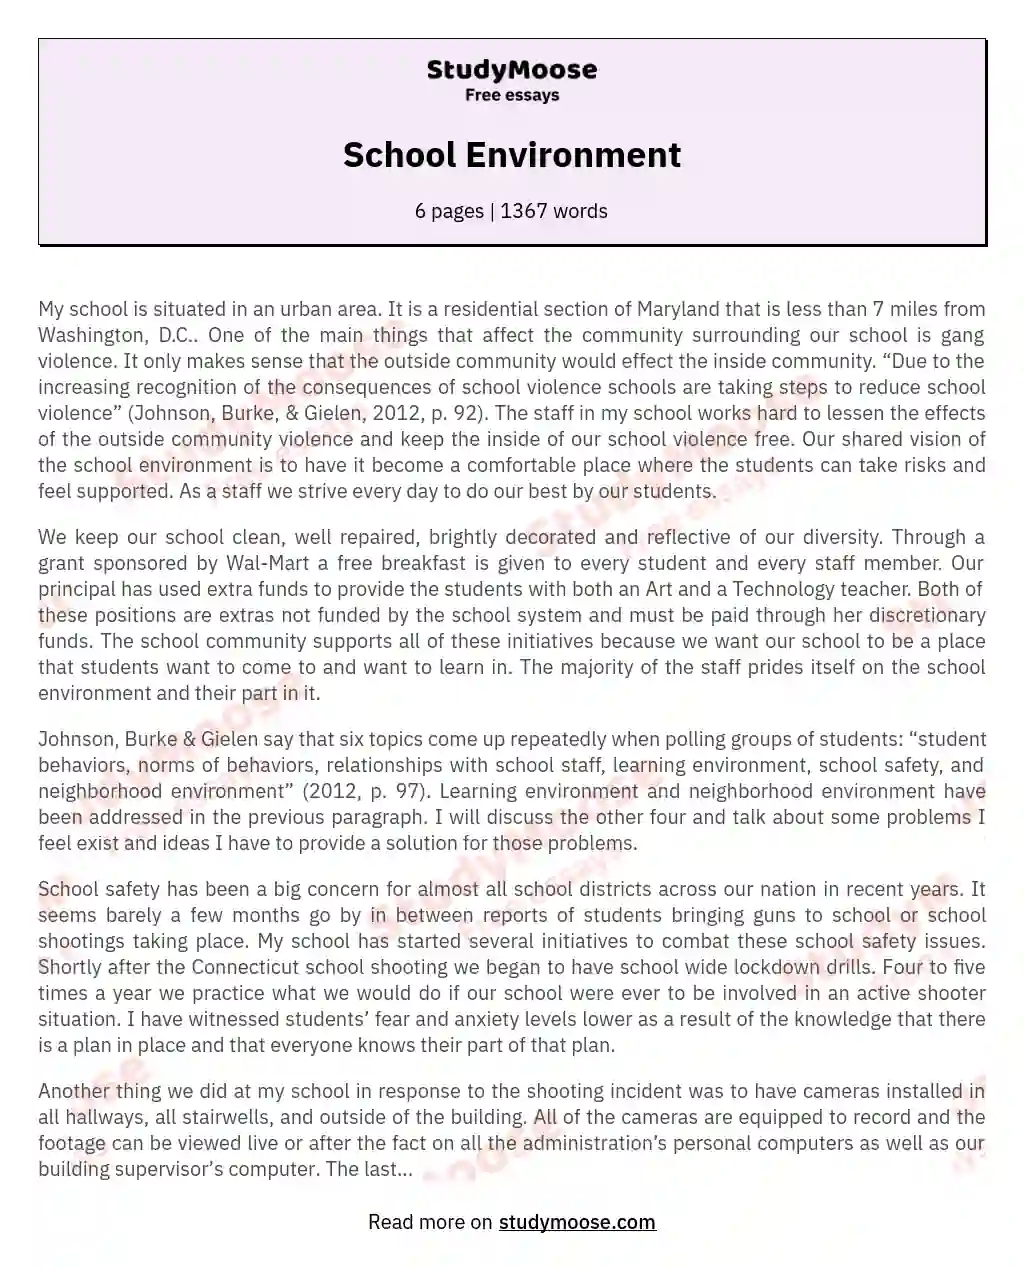 School Environment essay